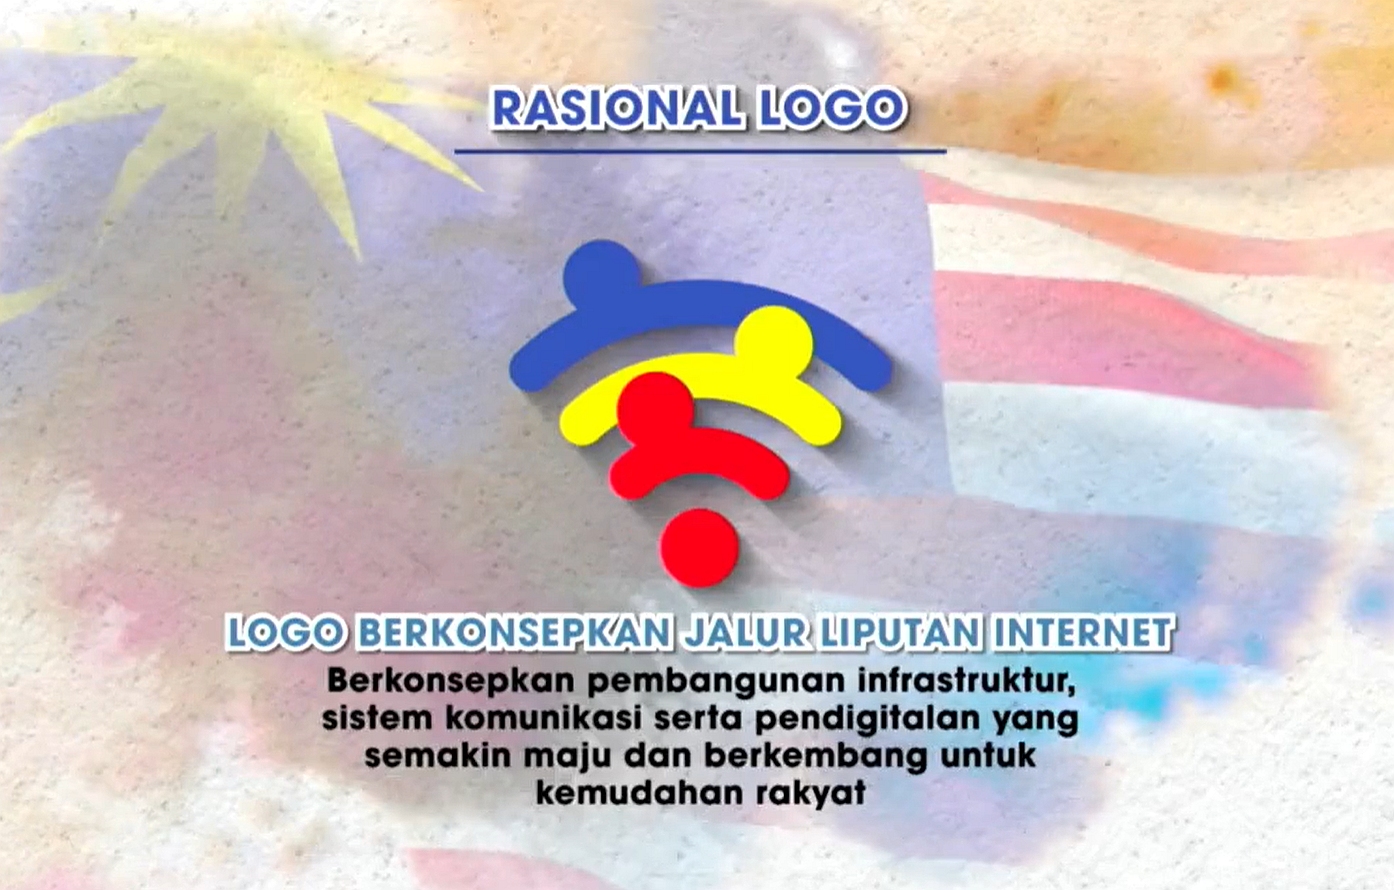 220701 malaysia national day logo 2022 rational